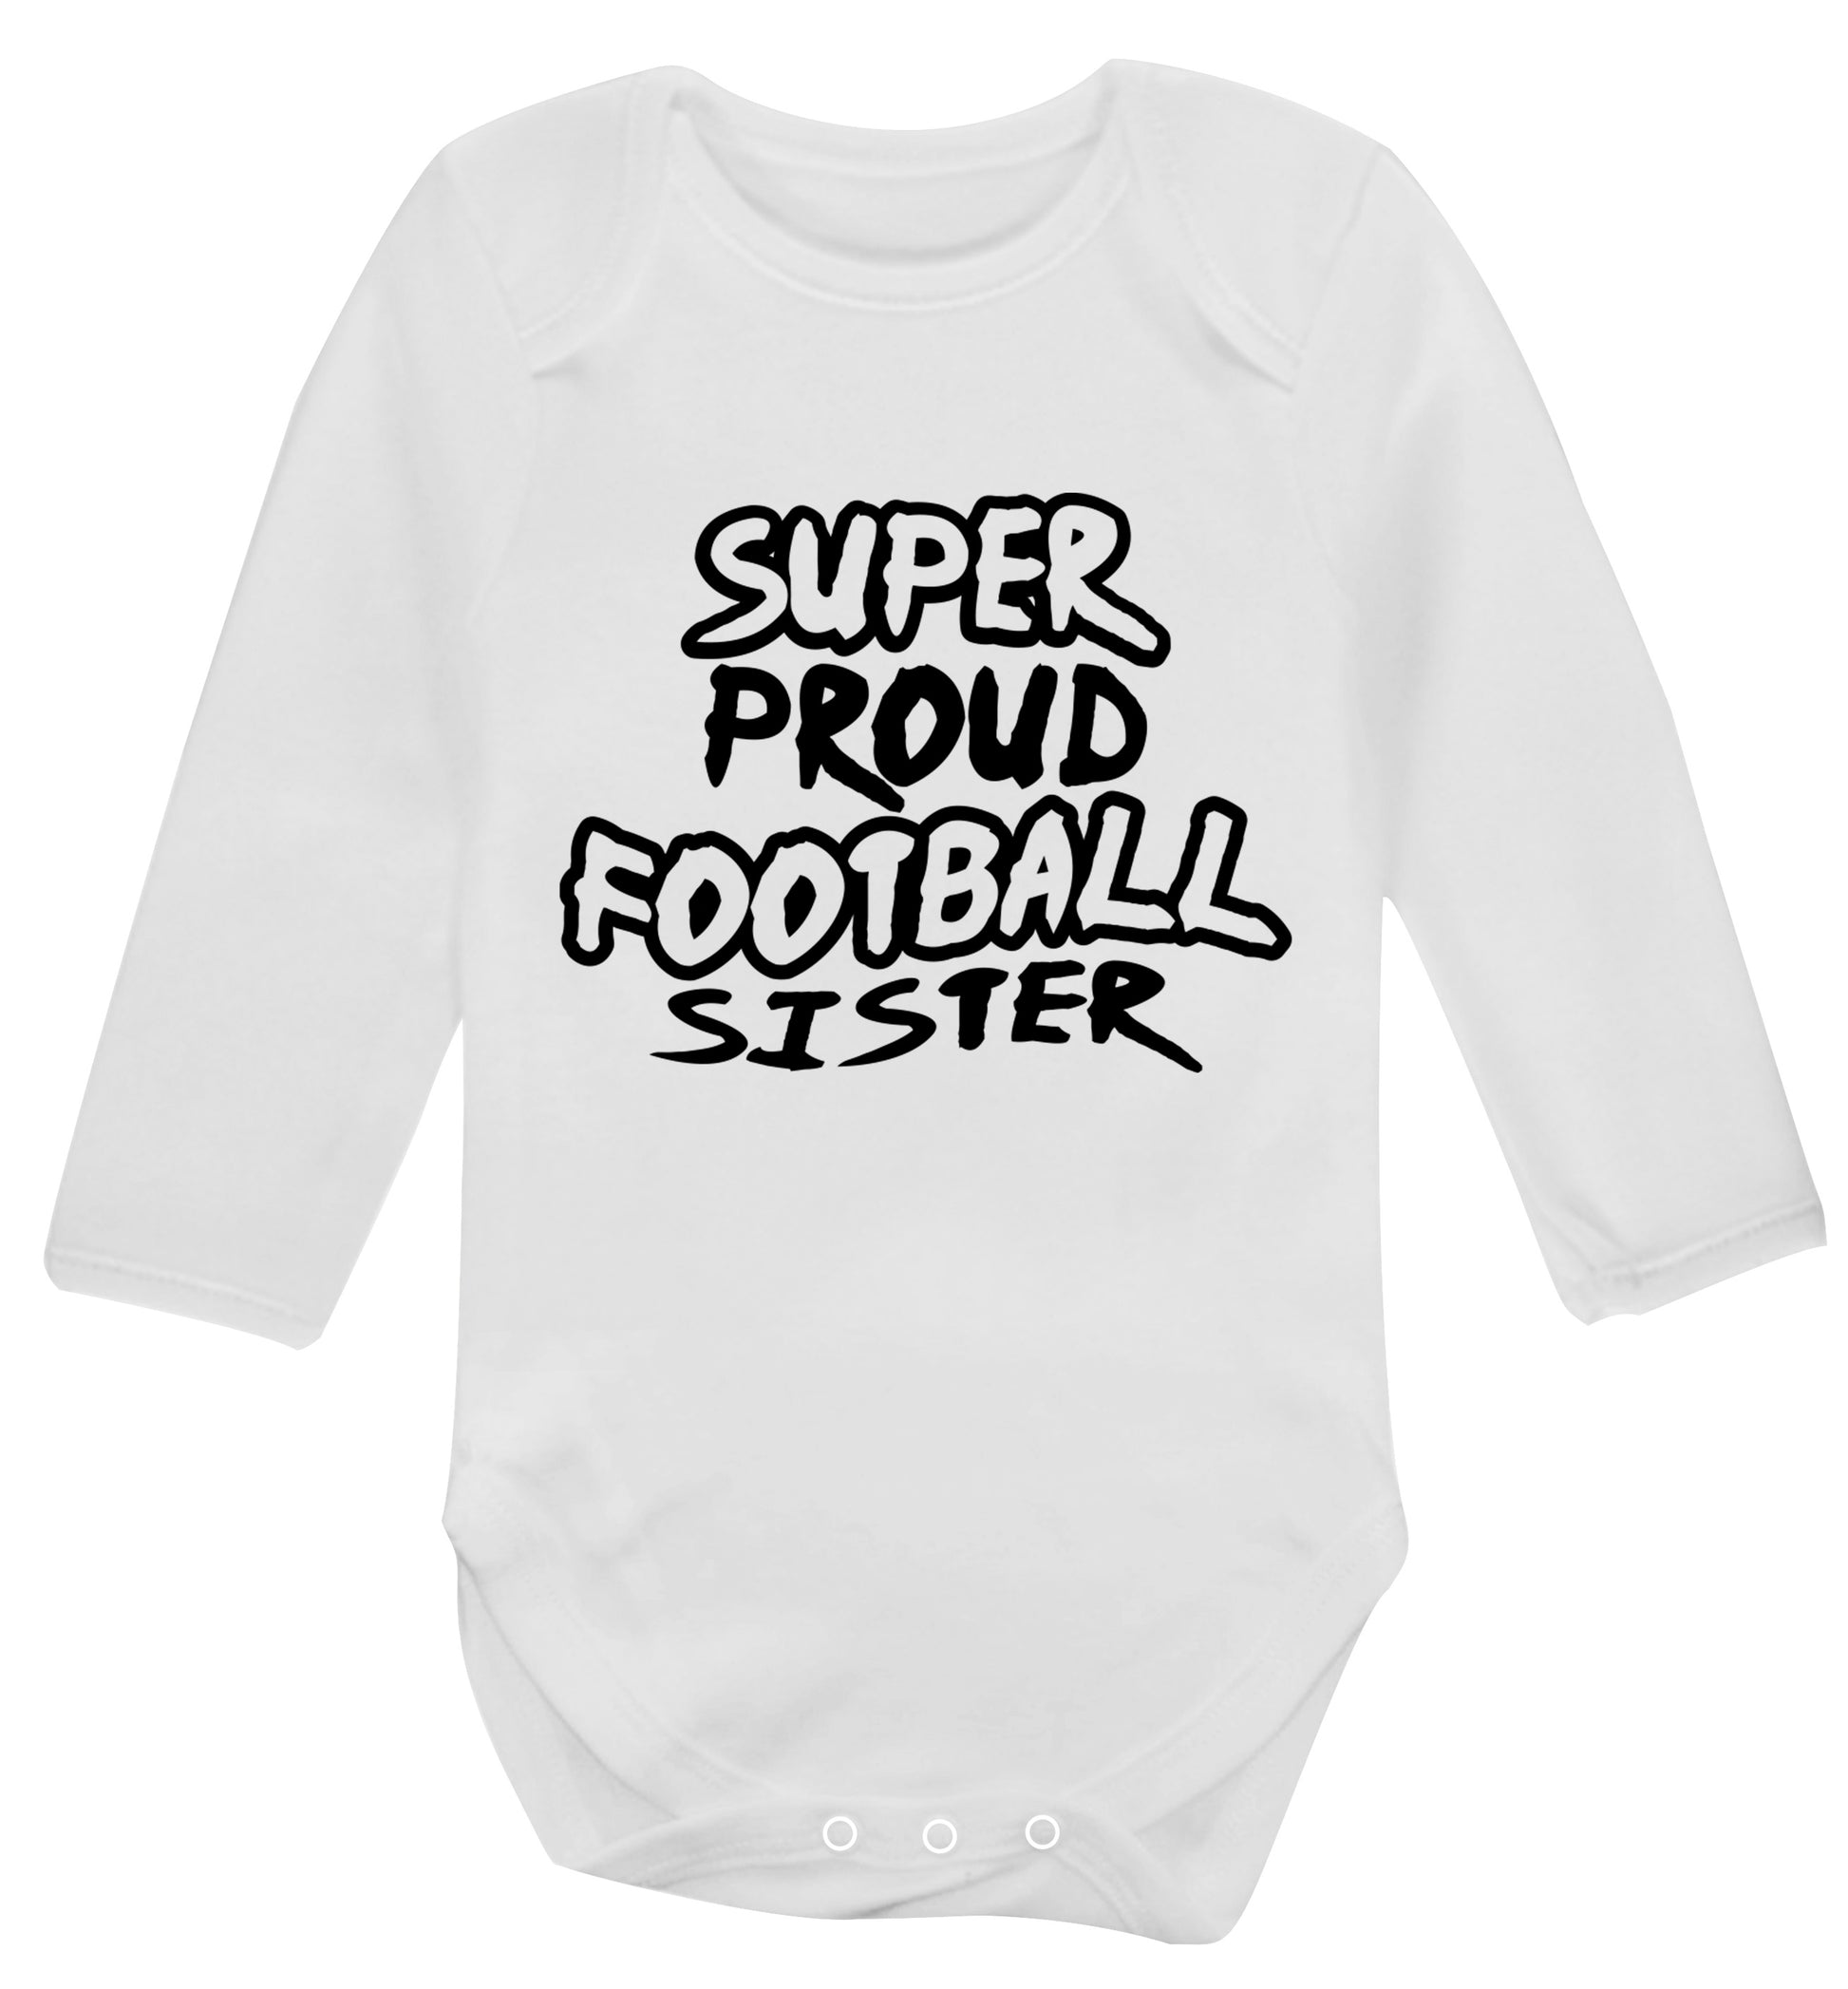 Super proud football sister Baby Vest long sleeved white 6-12 months